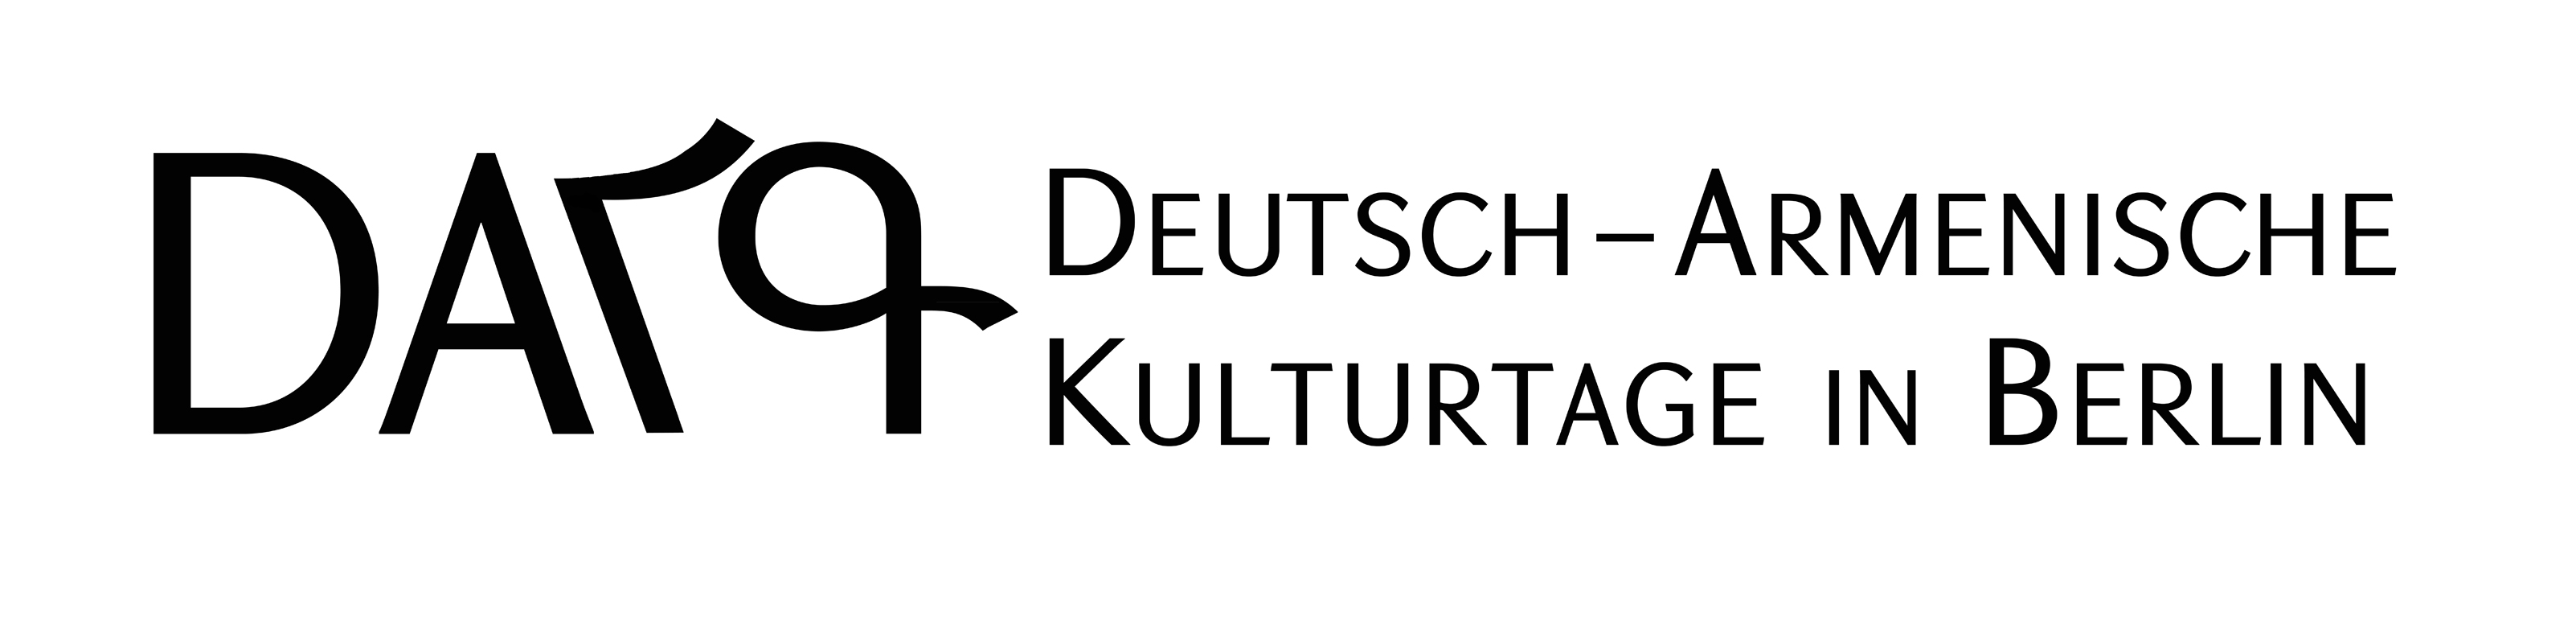 DEUTSCH - ARMENISCHE KULTURTAGE IN BERLIN 2015